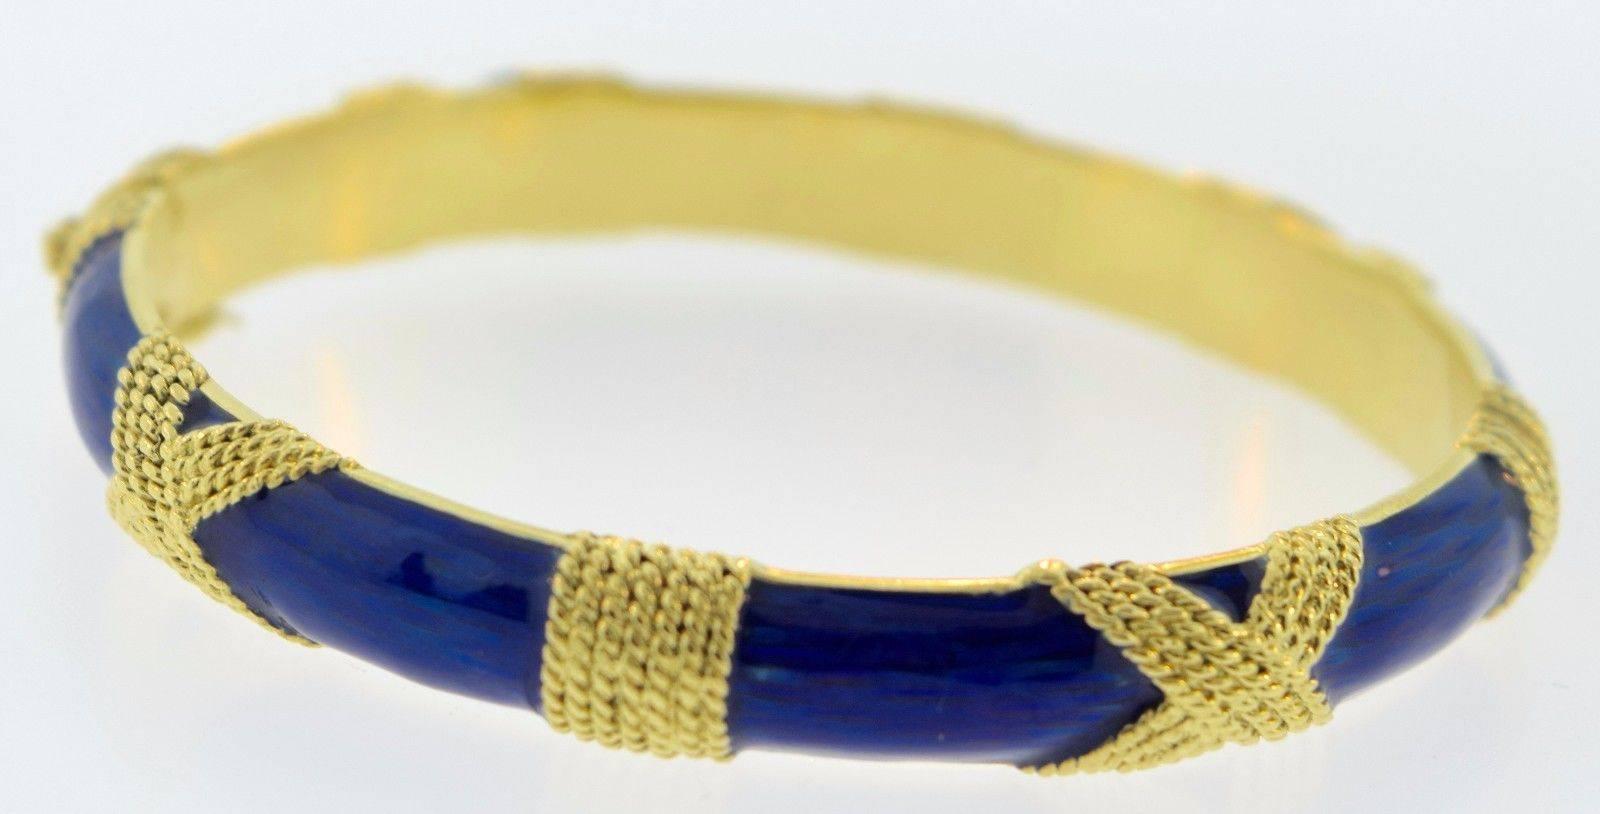 Metal: 18k Yellow Gold
Non-Metal: Blue Enamel
Weight: 37.0 grams
Width: 8.23 mm
Wrist Size: Small-Medium
Hallmark: 18k, ITALY, CARTIER